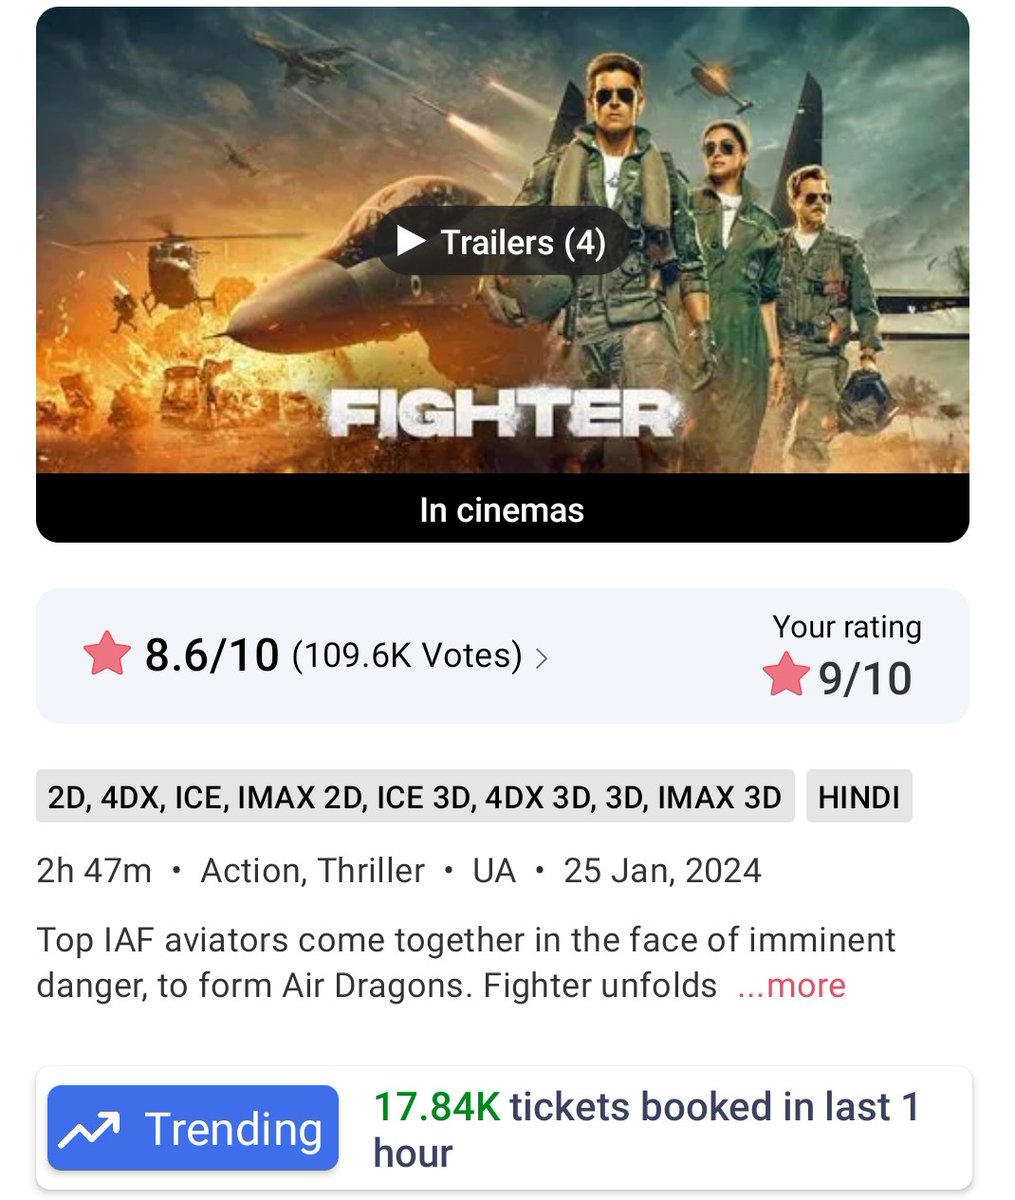 17.84k ticket booked in last 1 hour 
Looks like it will be 13-14cr today

#FighterMovie #Fighter
#HrithikRoshan𓃵 #DeepikaPadukone #SiddharthAnand